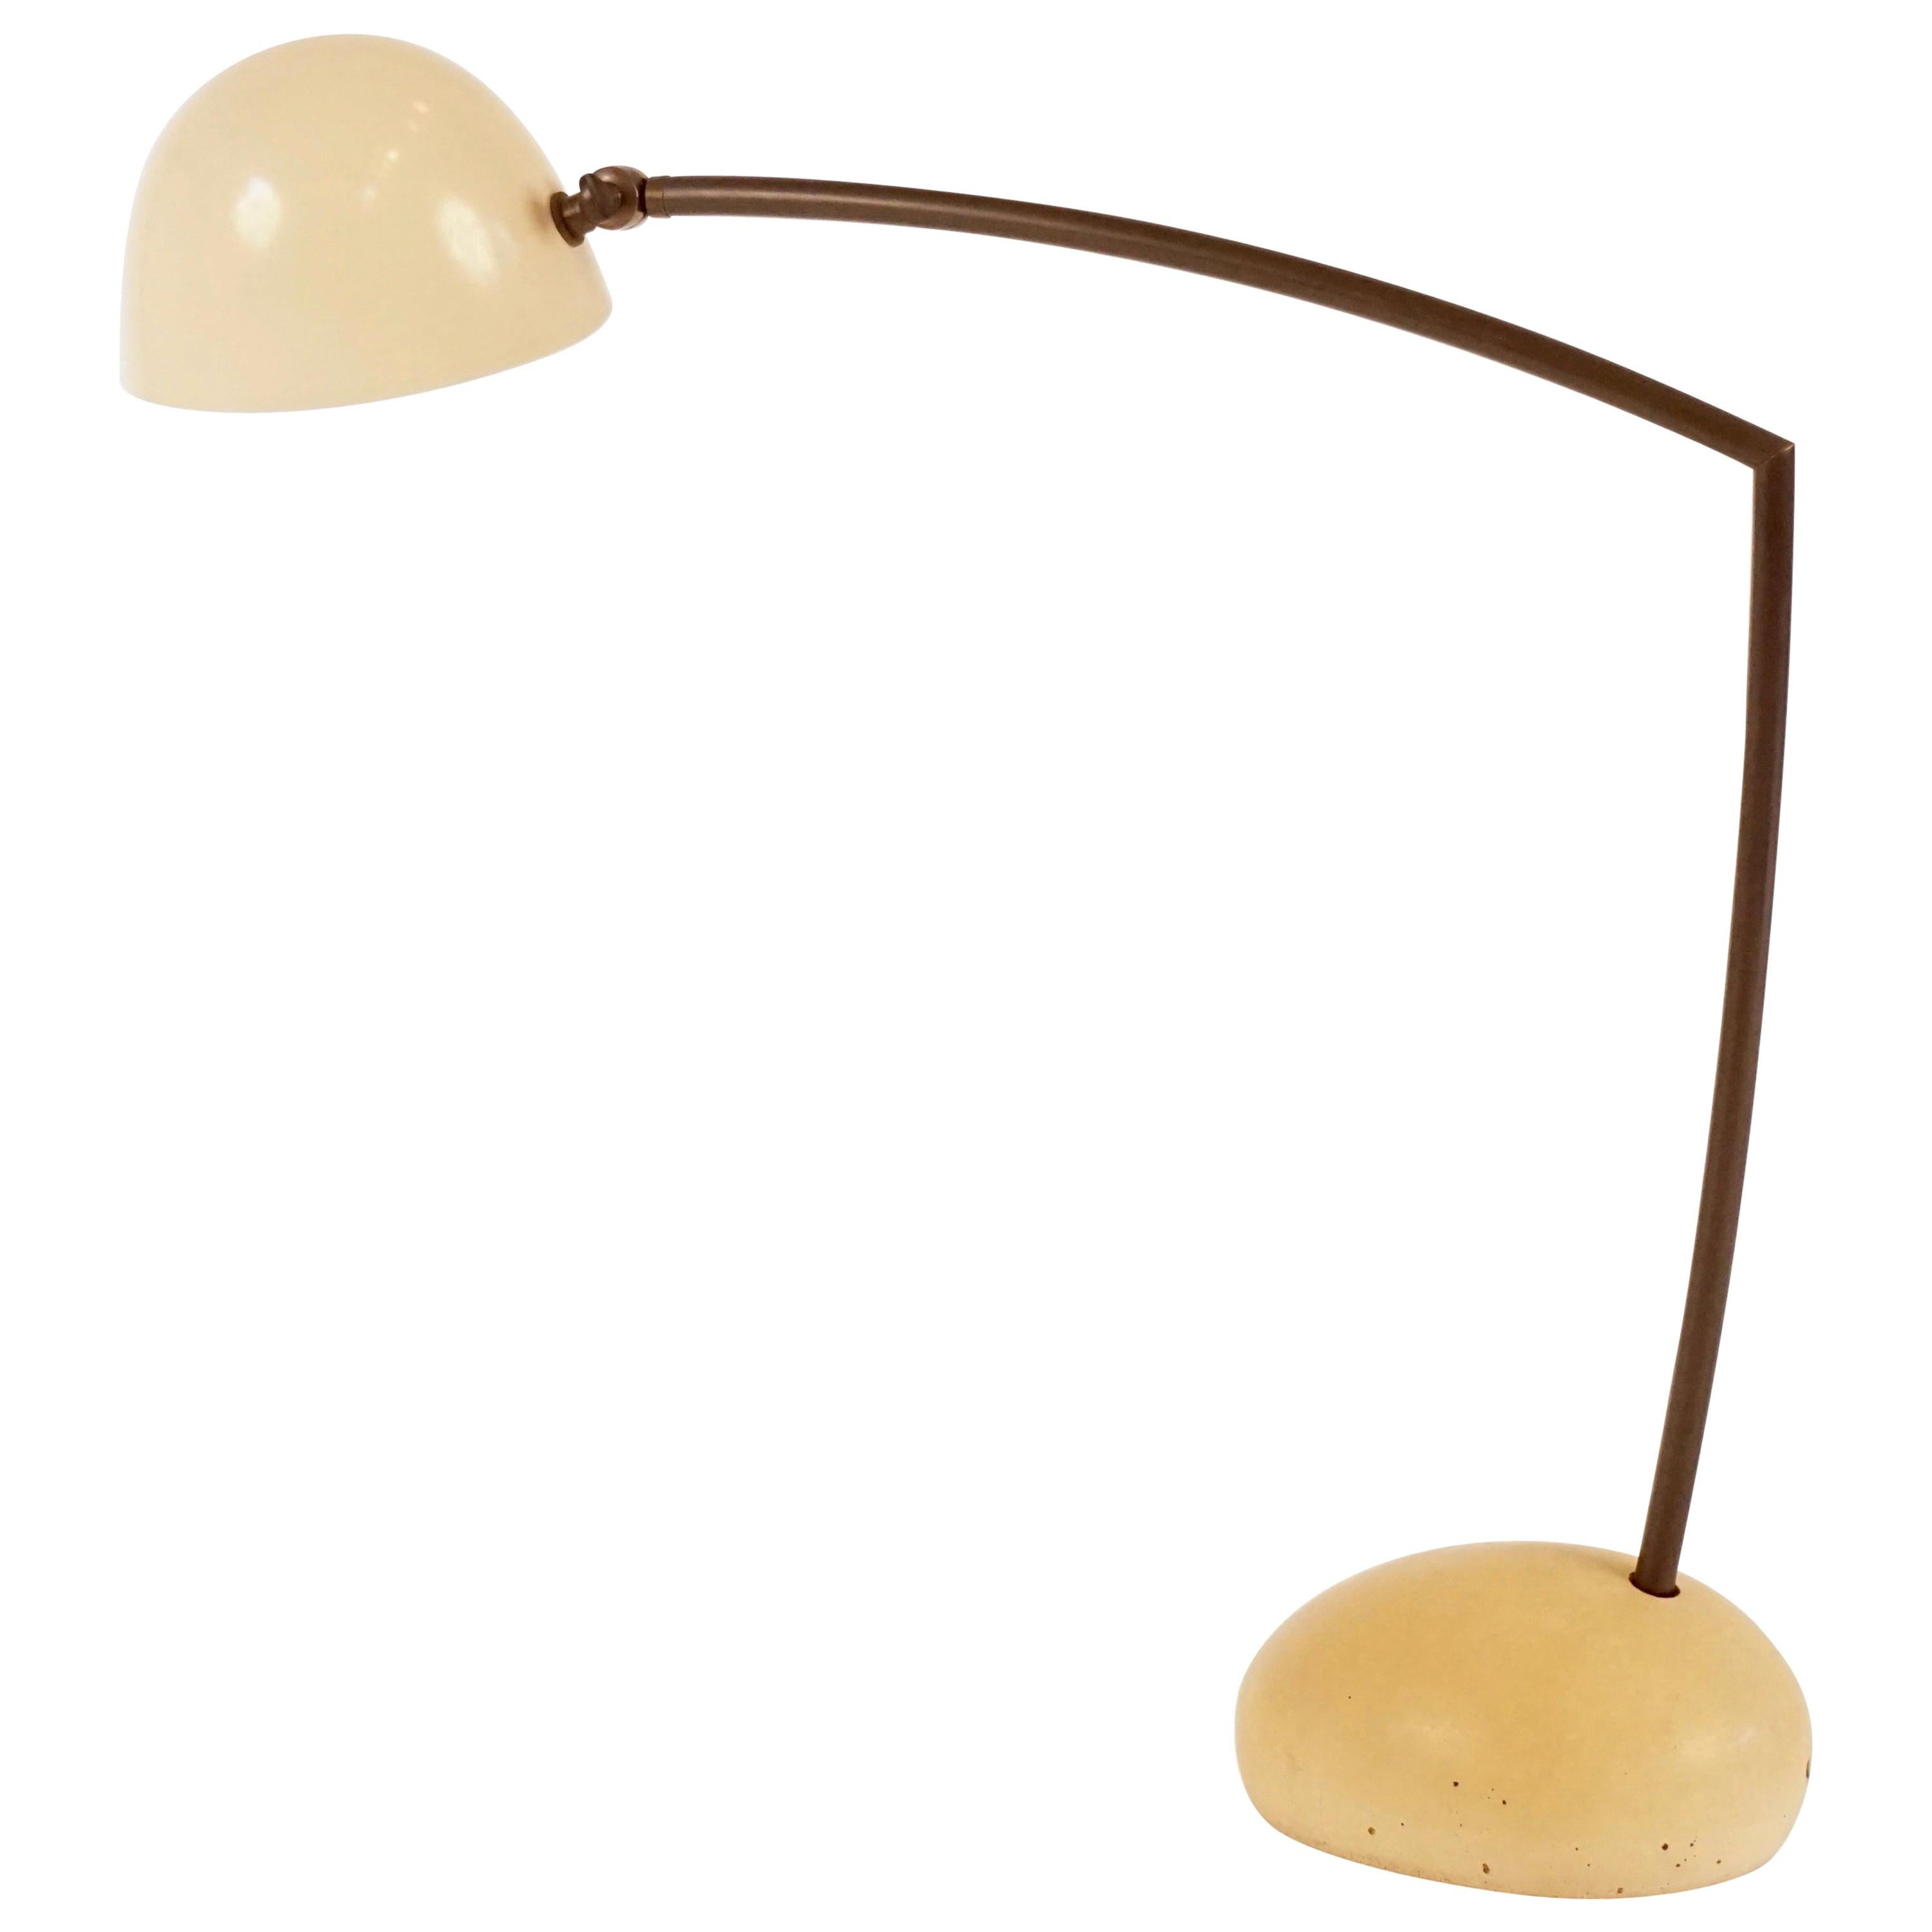 Custom Skye Table Lamp Medium, with Almond Shade and Light Base